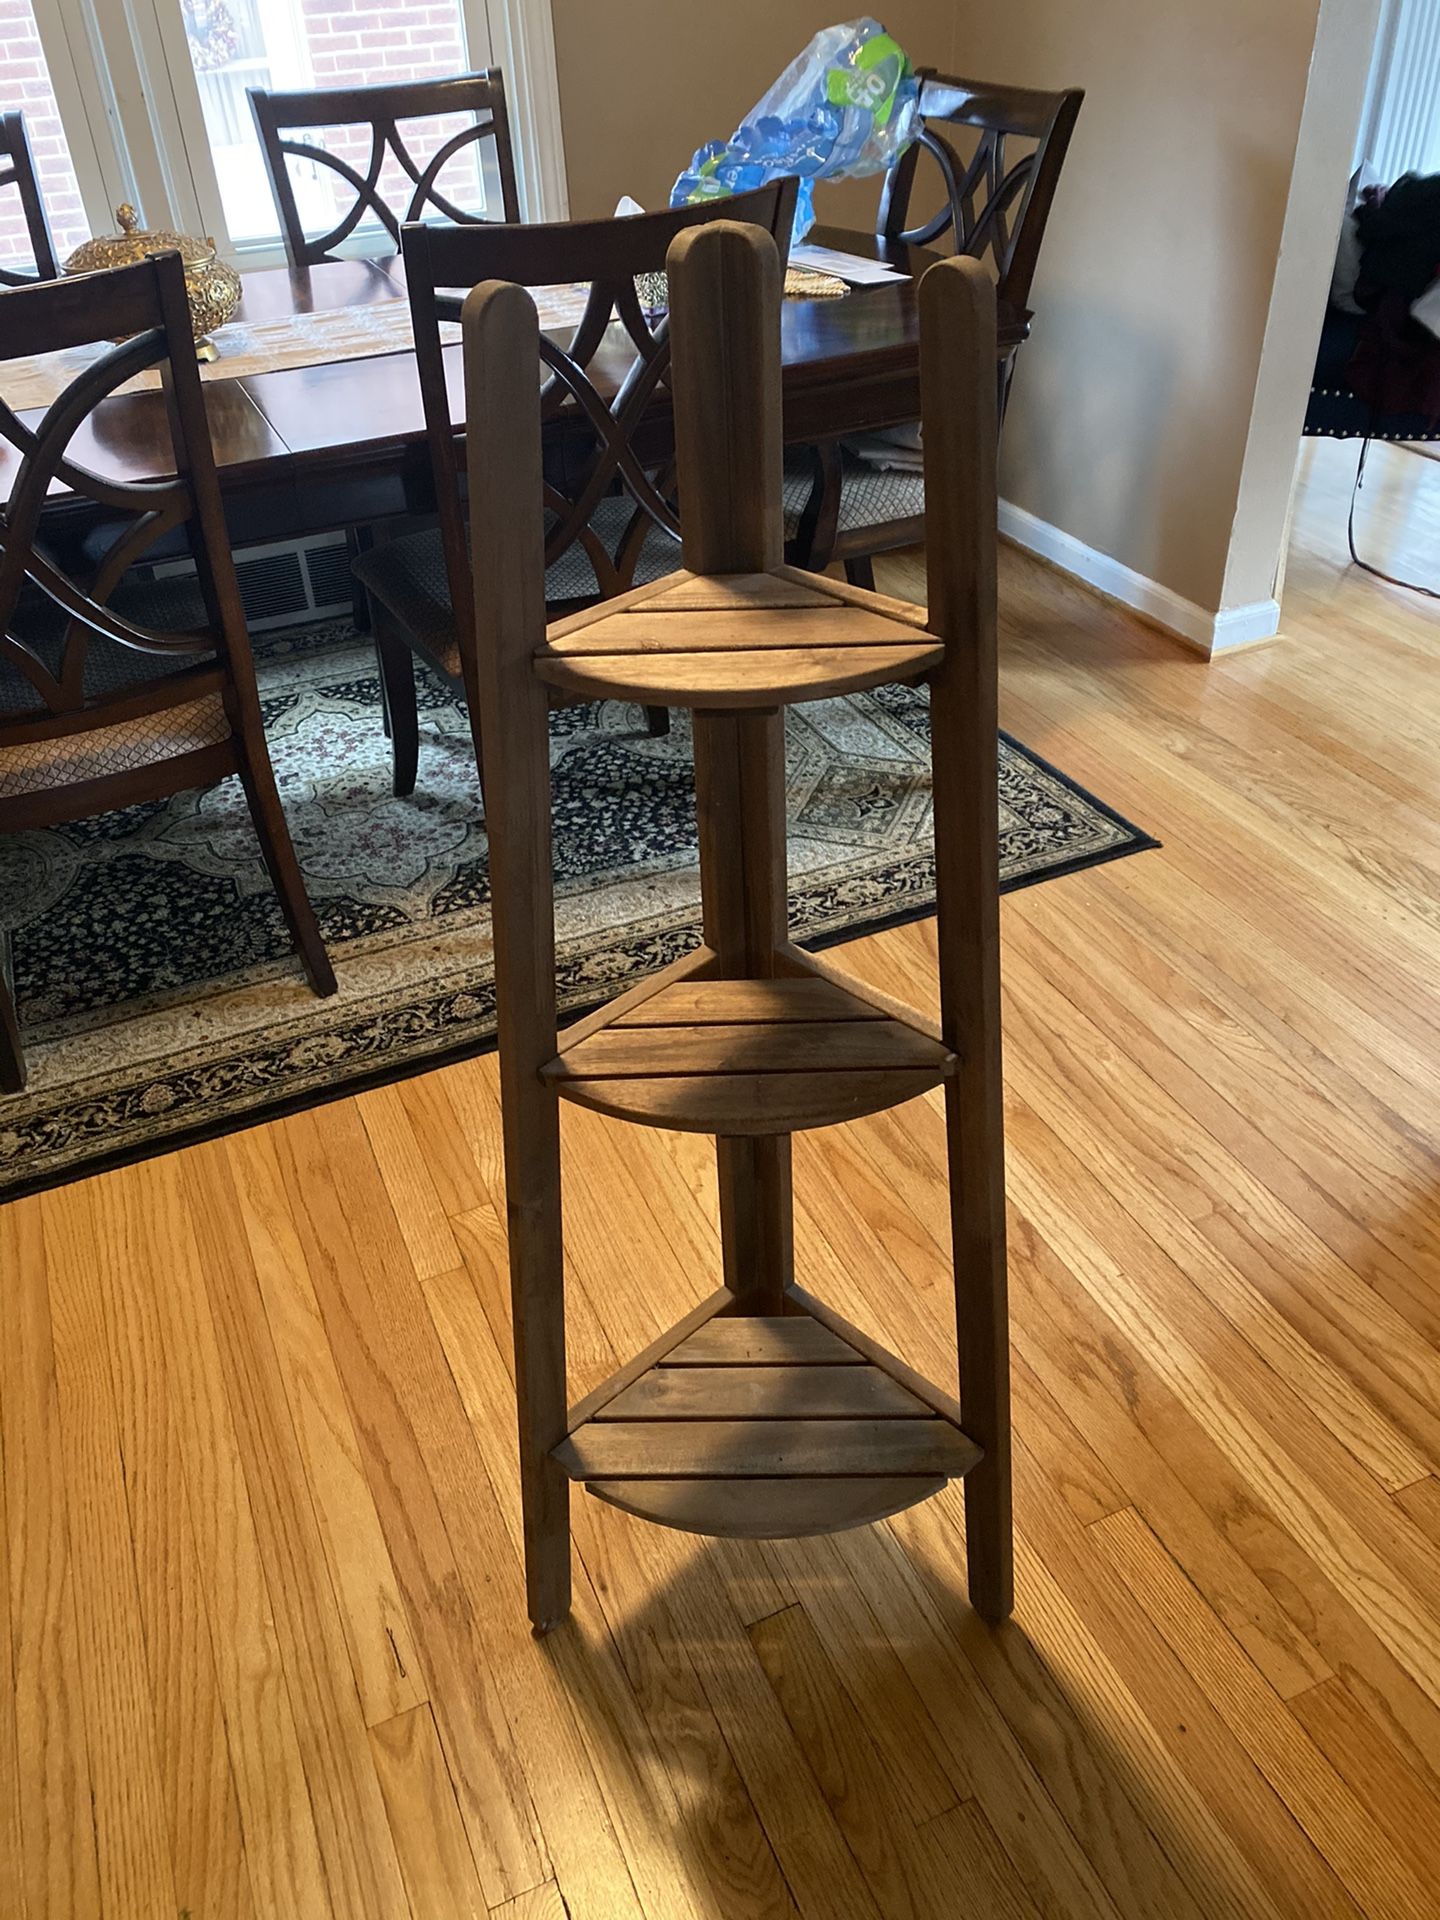 Wood stool furniture shelf